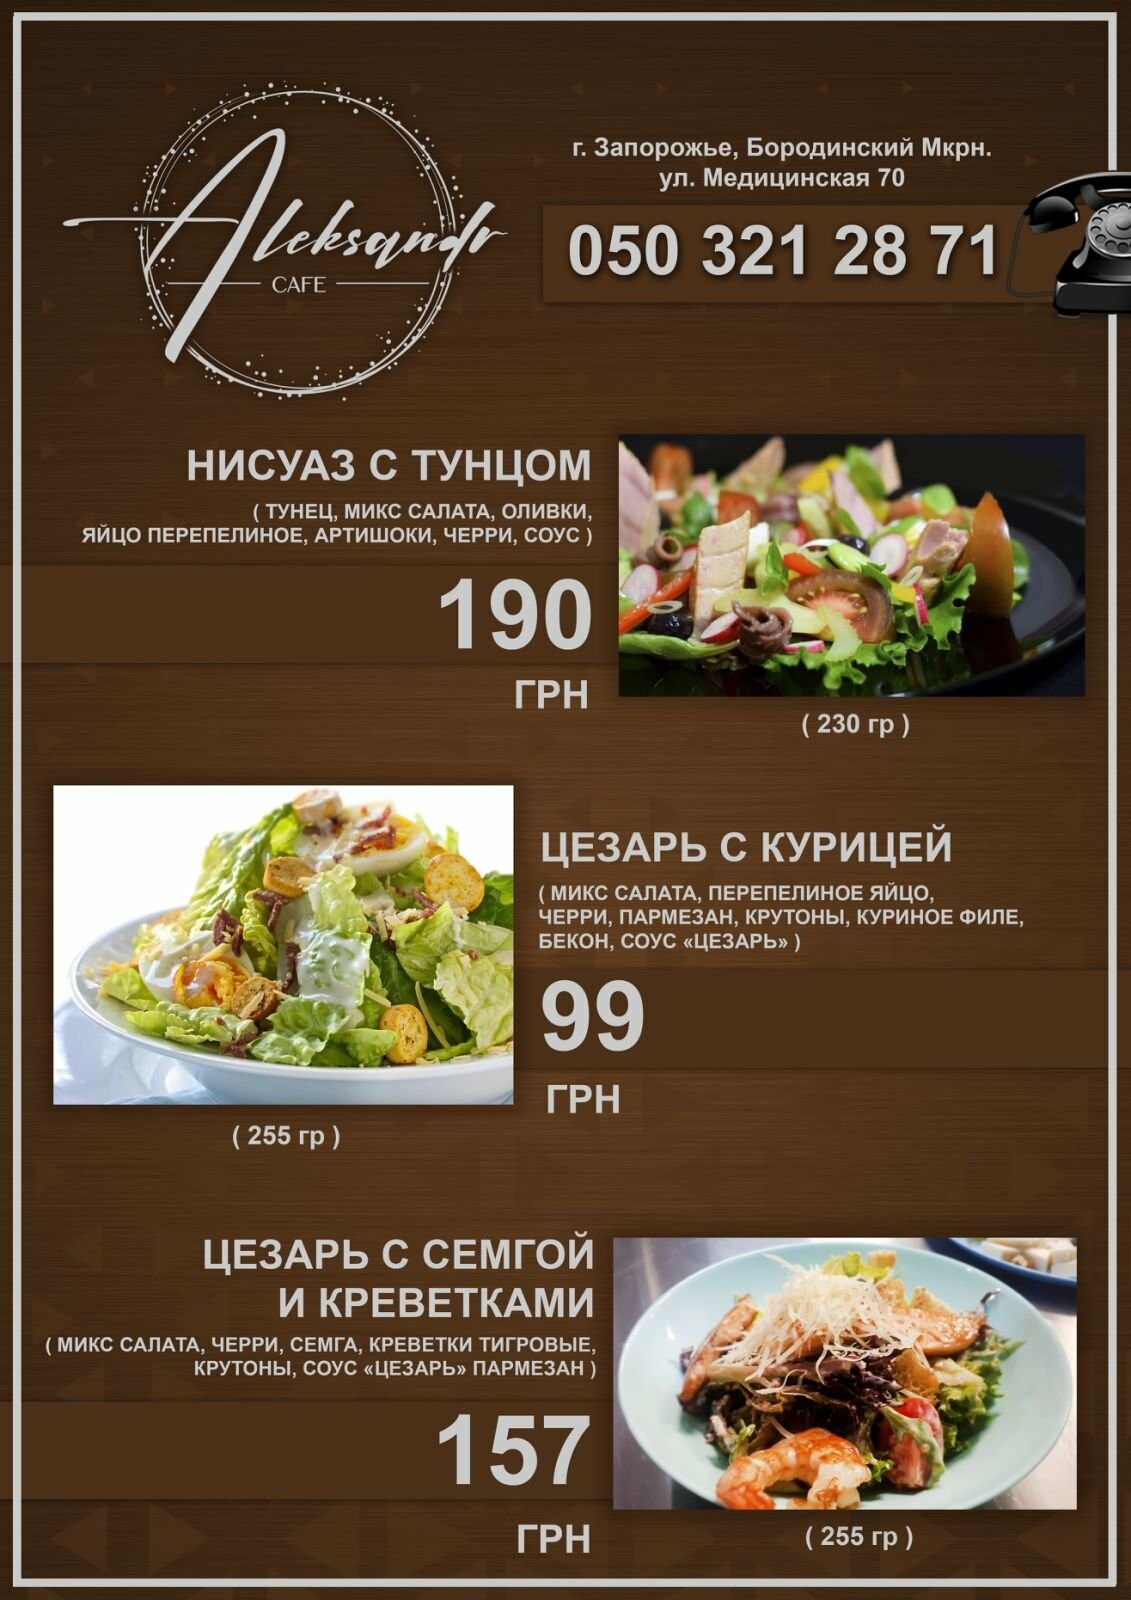 Доставка еды в Запорожье кафе Александр, фото-5